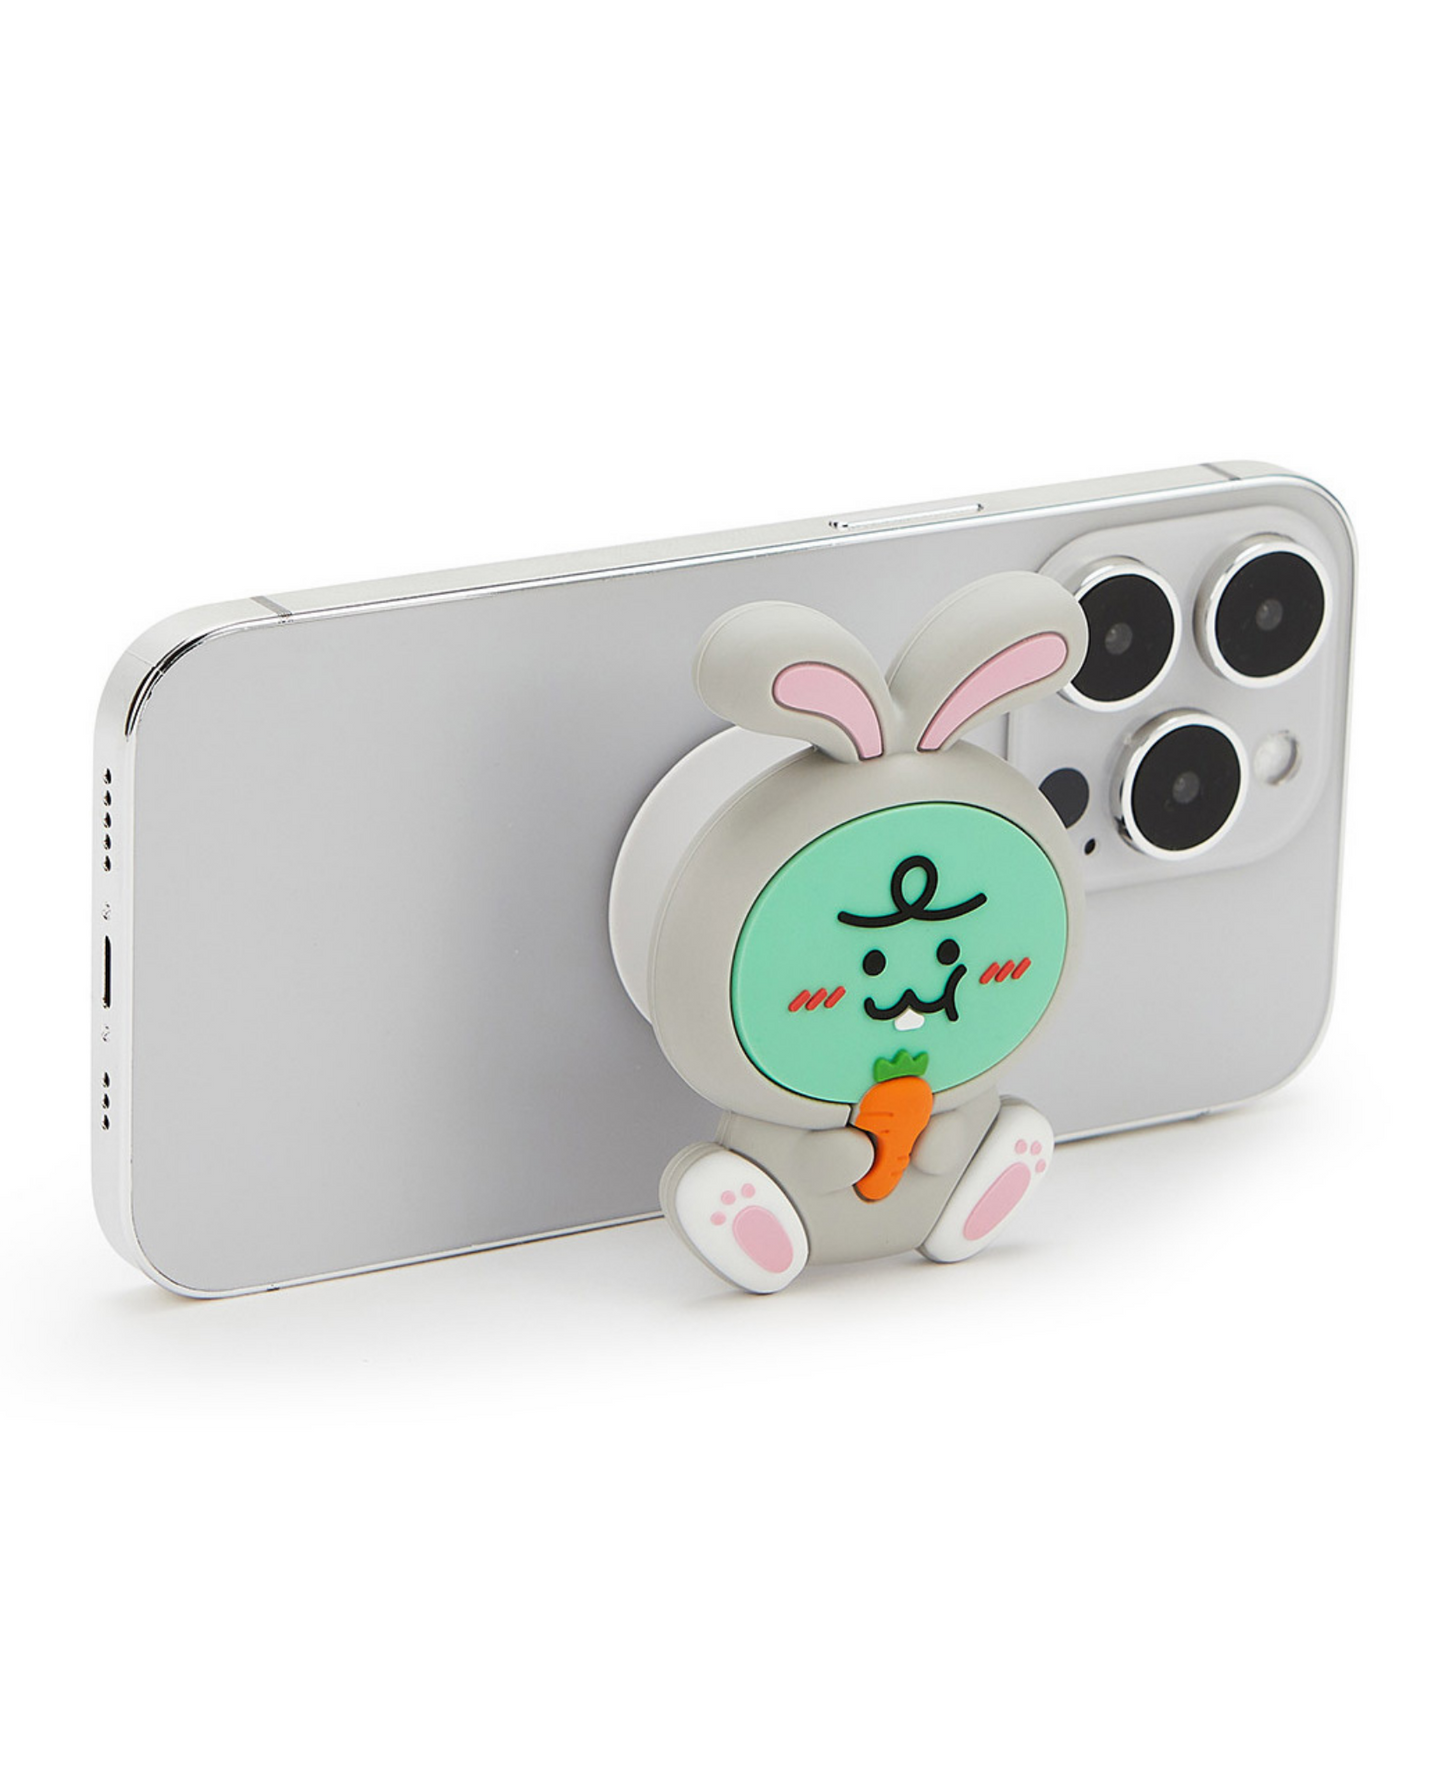 Jordy Rabbit Phone Grip Holder Kakao Friends